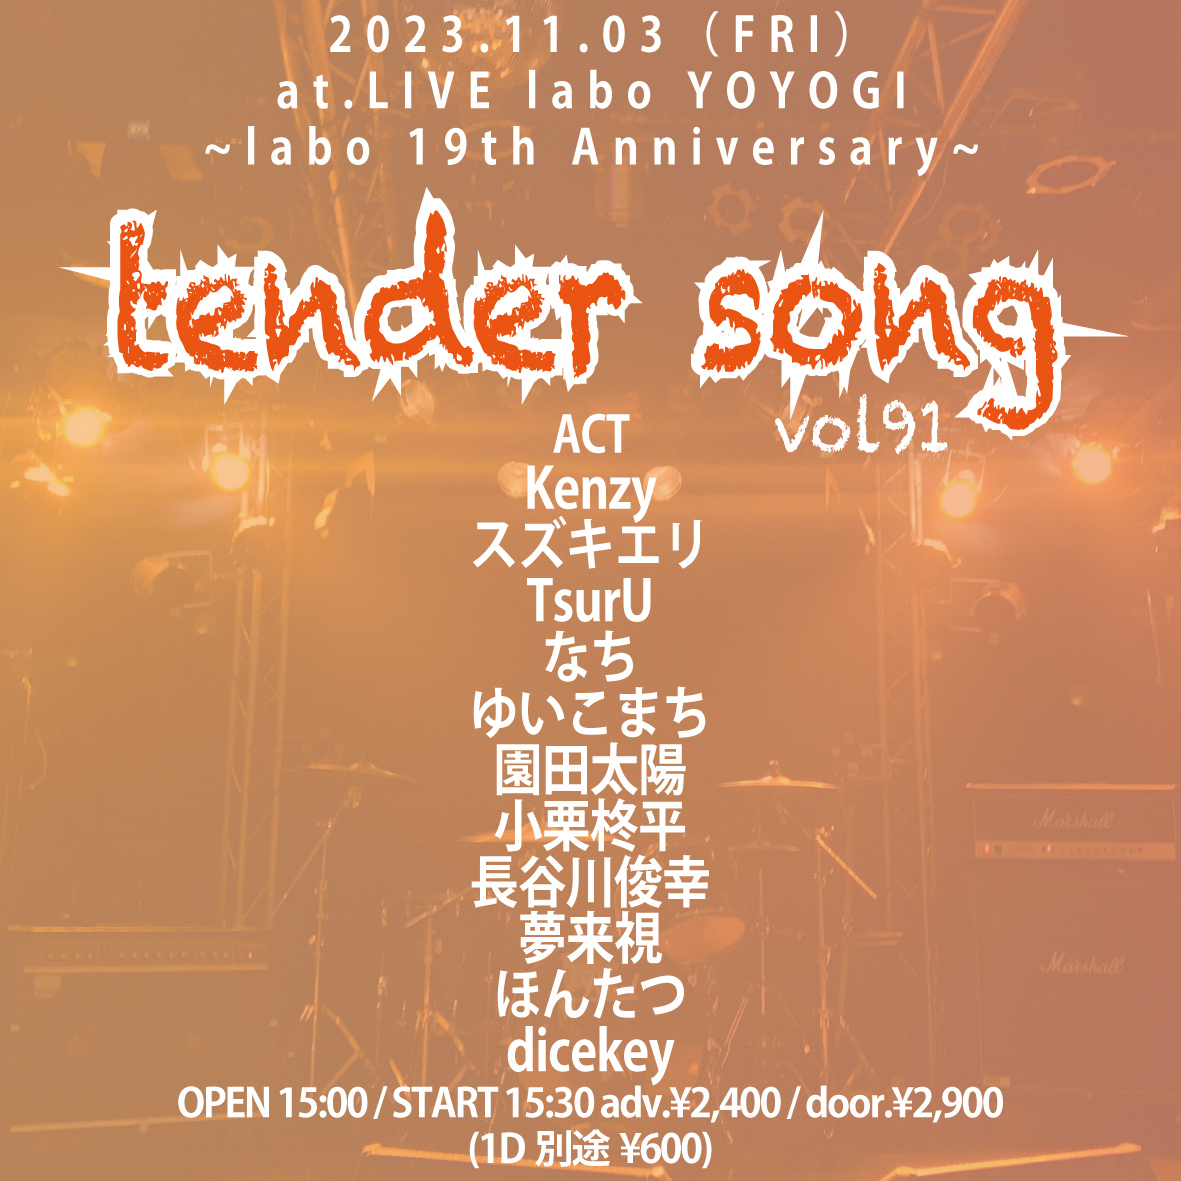 ～ labo 19th Anniversary!! ～
tender song vol.91